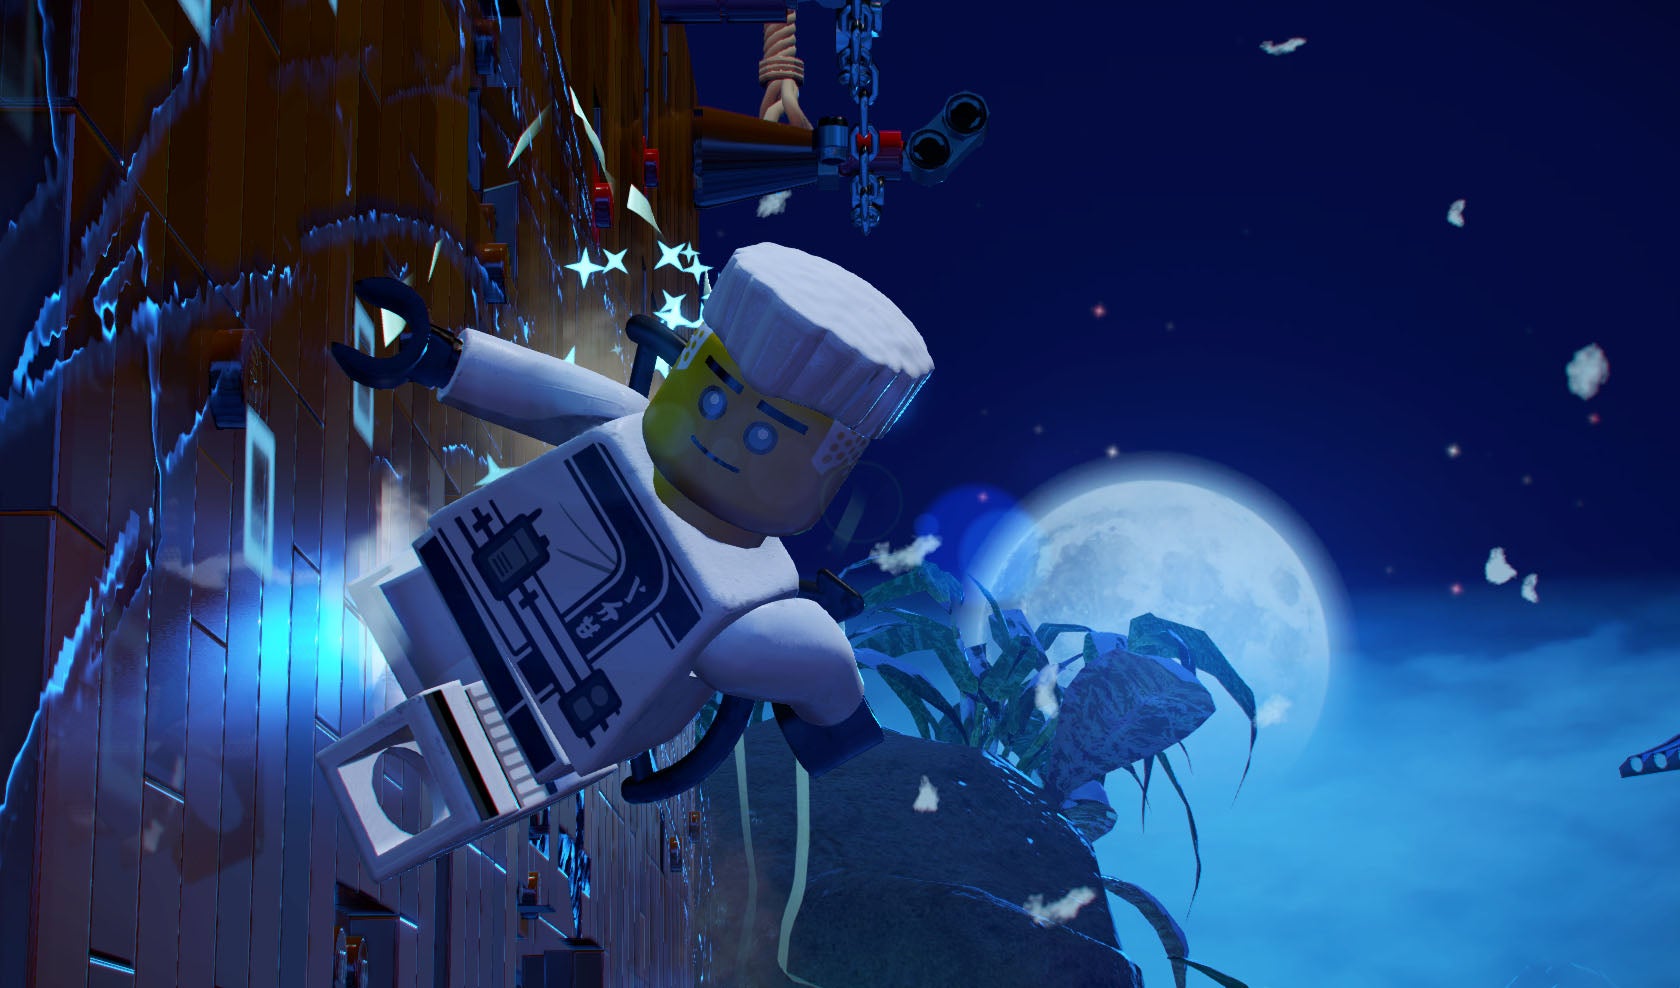 Lego Ninjago character in a moonlit virtual scene.